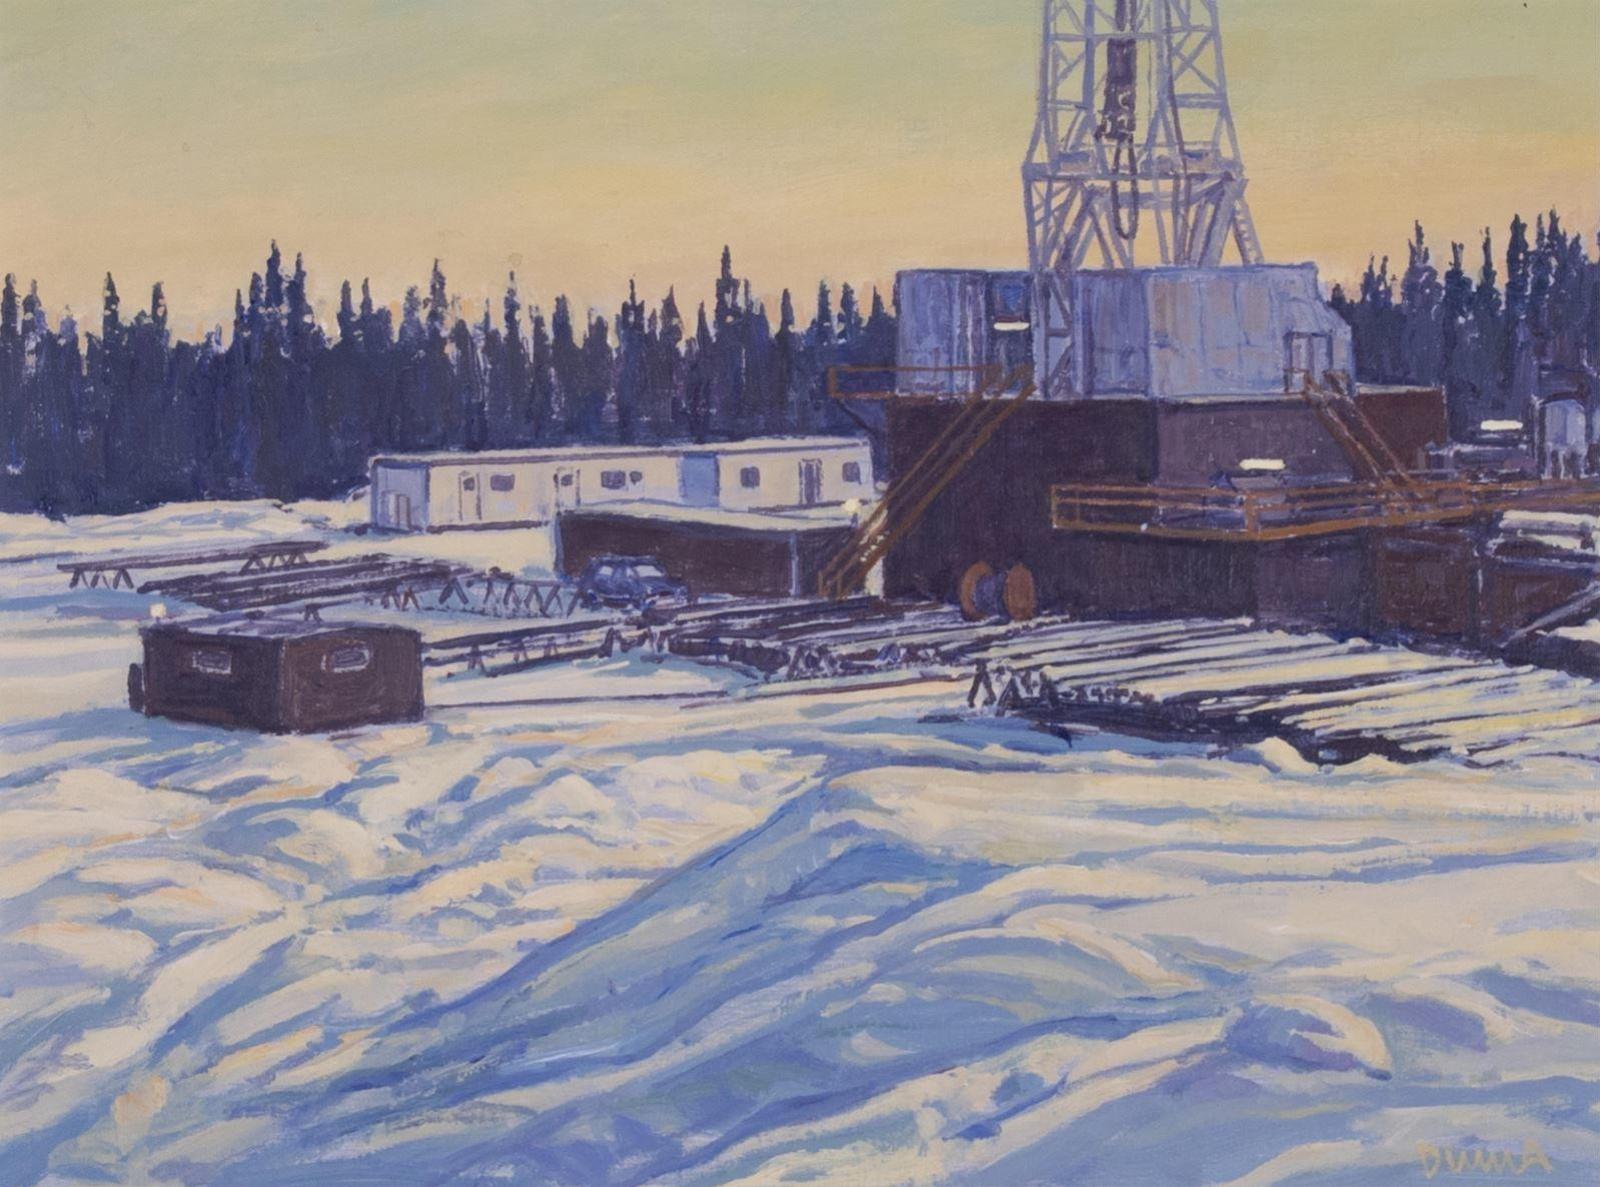 William (Bill) Duma (1936) - Rig in Winter; 1983